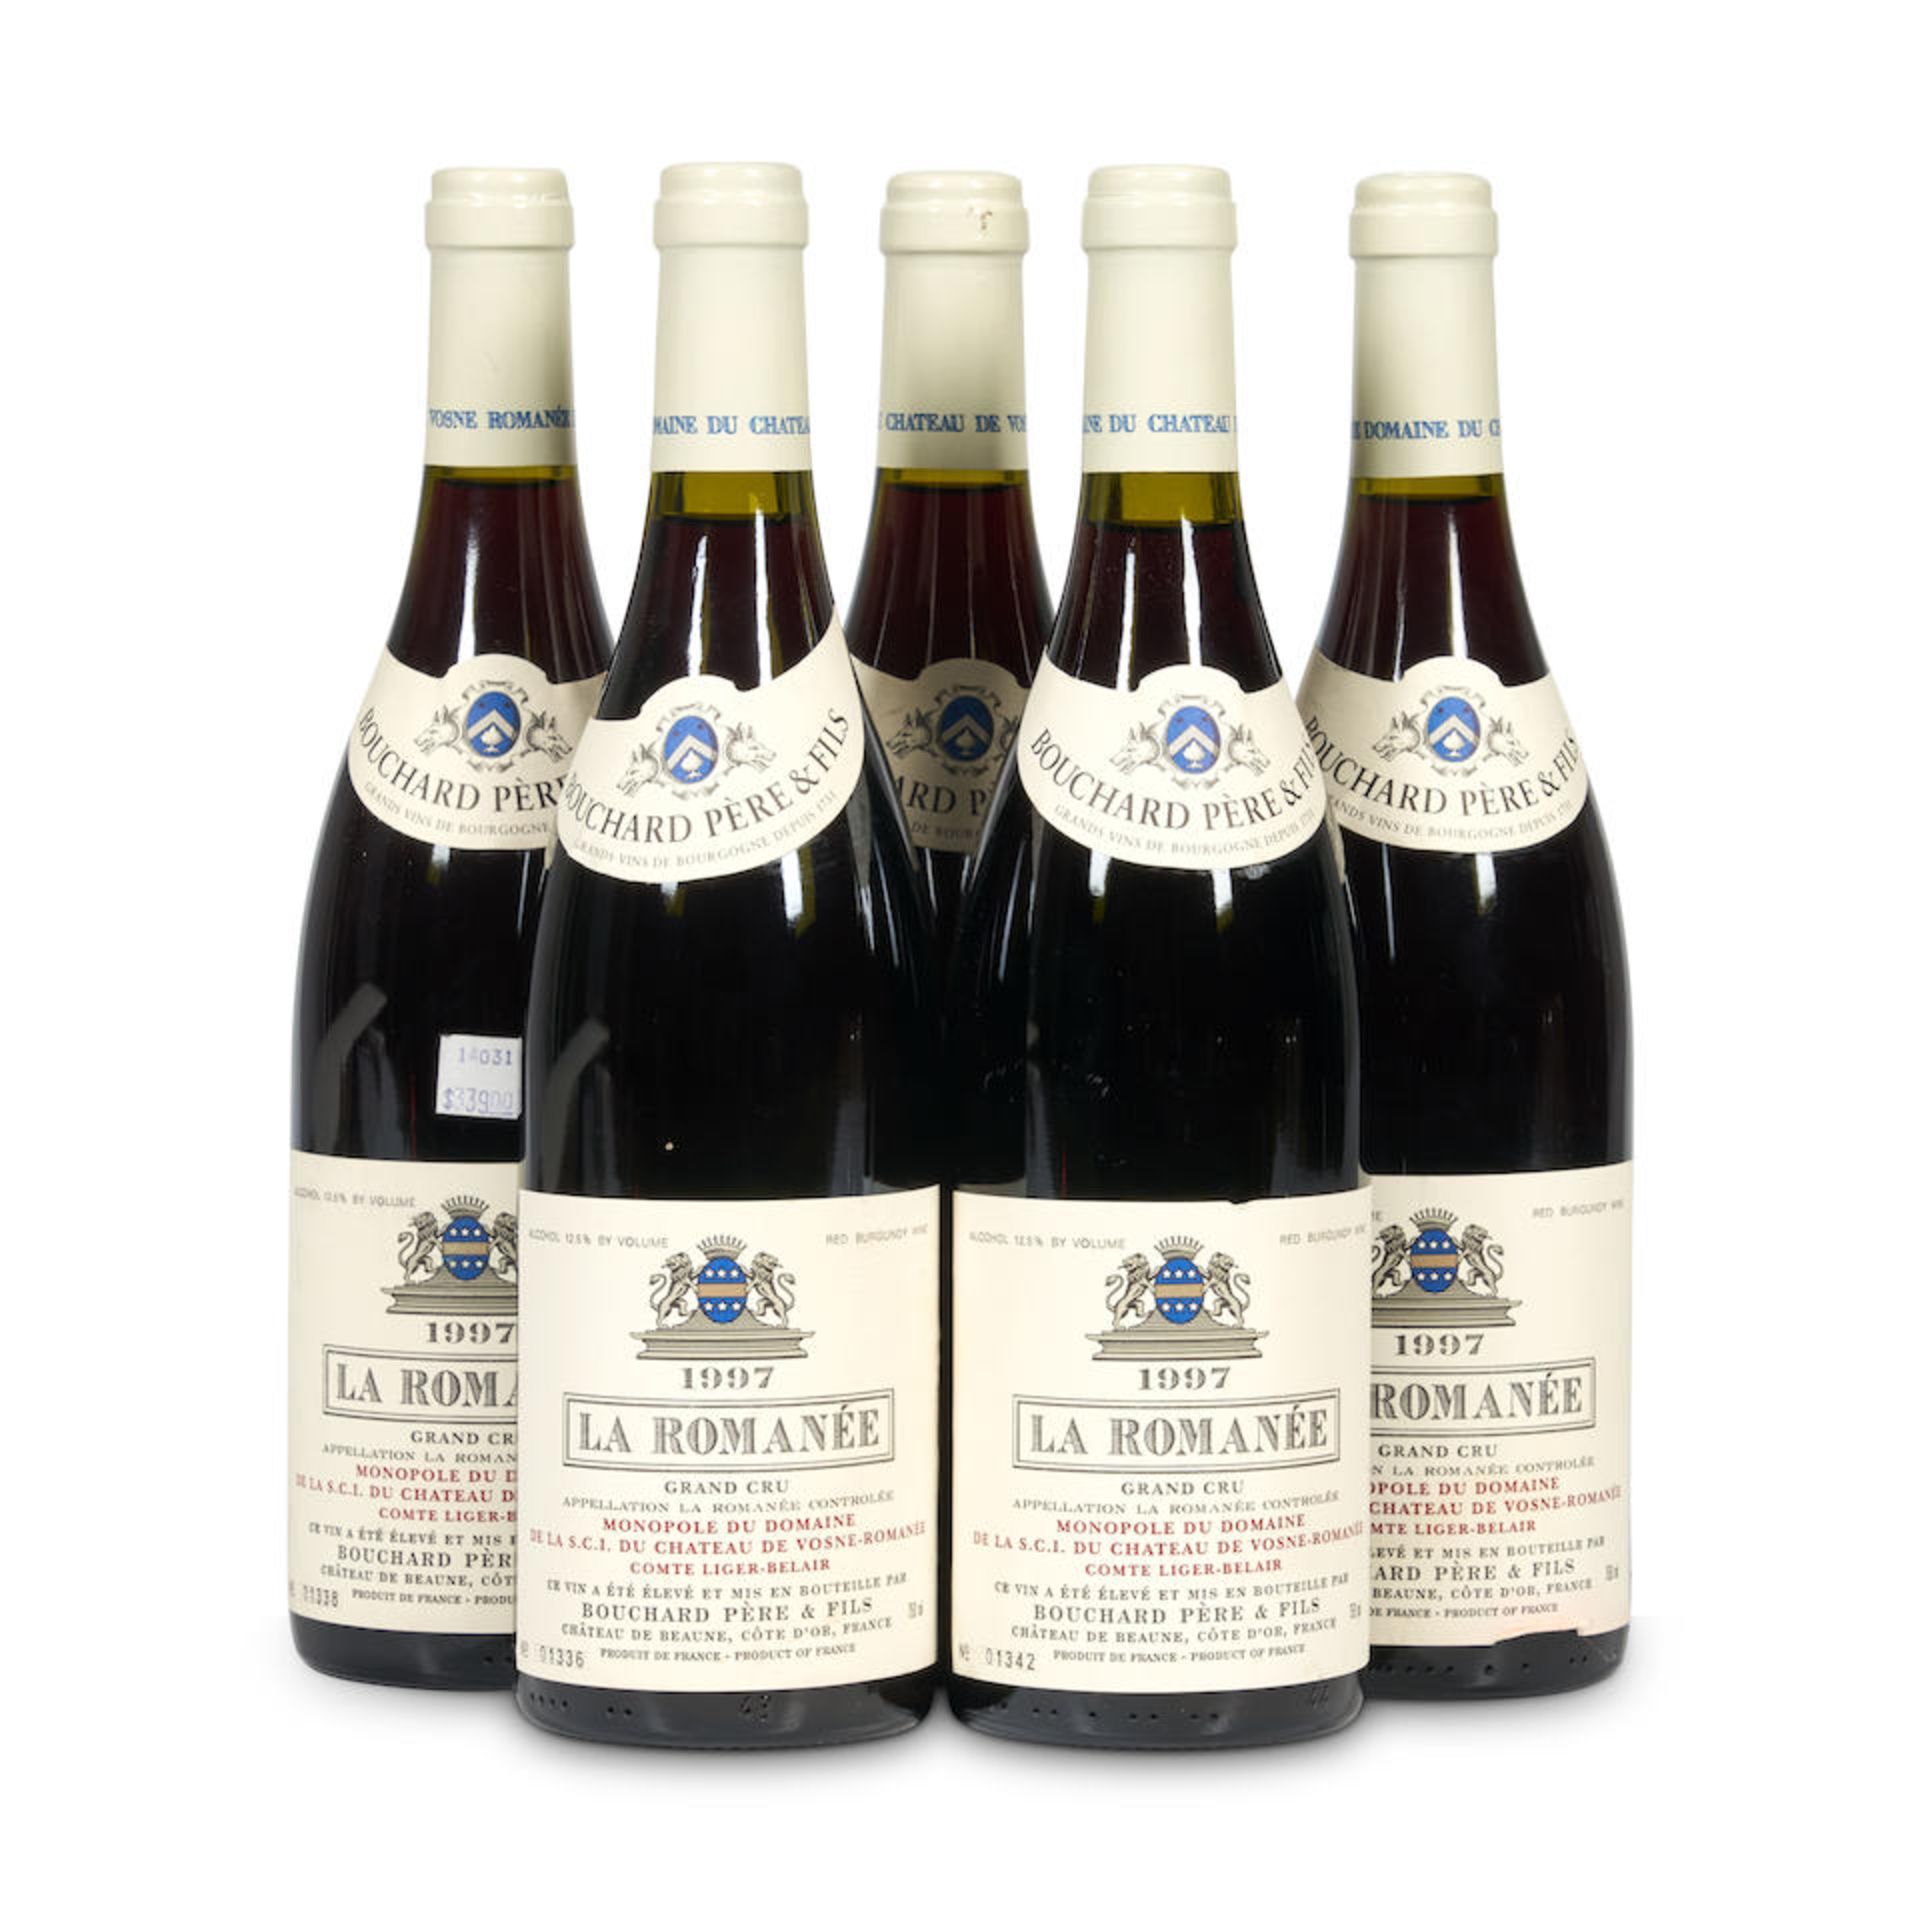 Bouchard La Romanee 1997 (5 bottles)